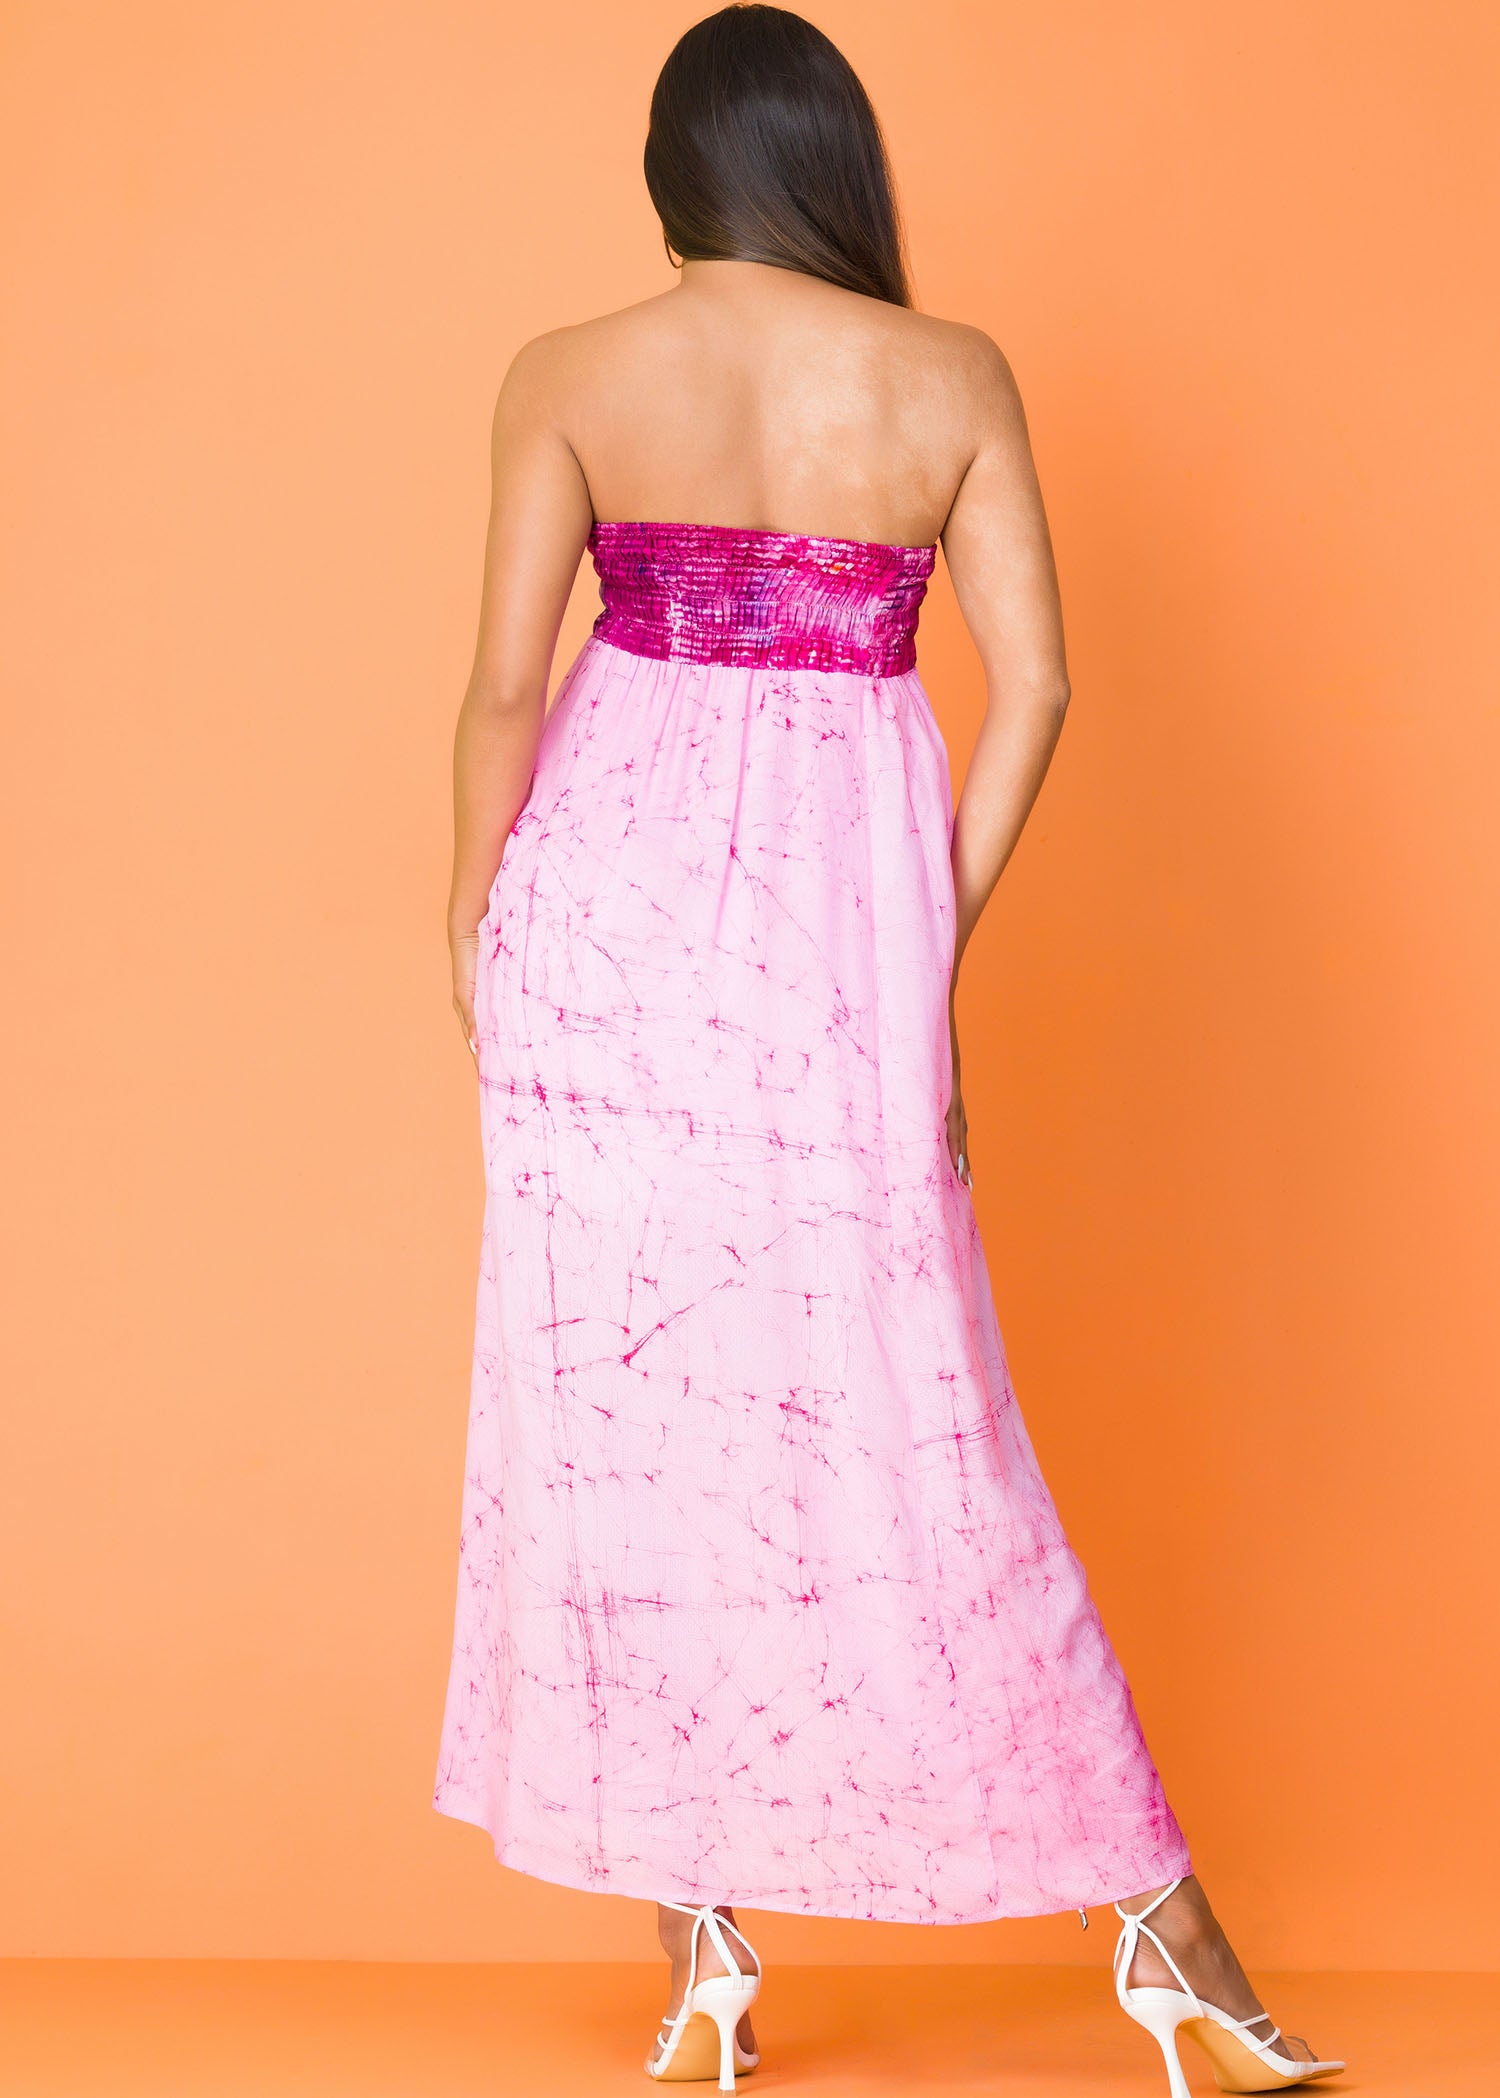 Shirred Elastic Batik Dress